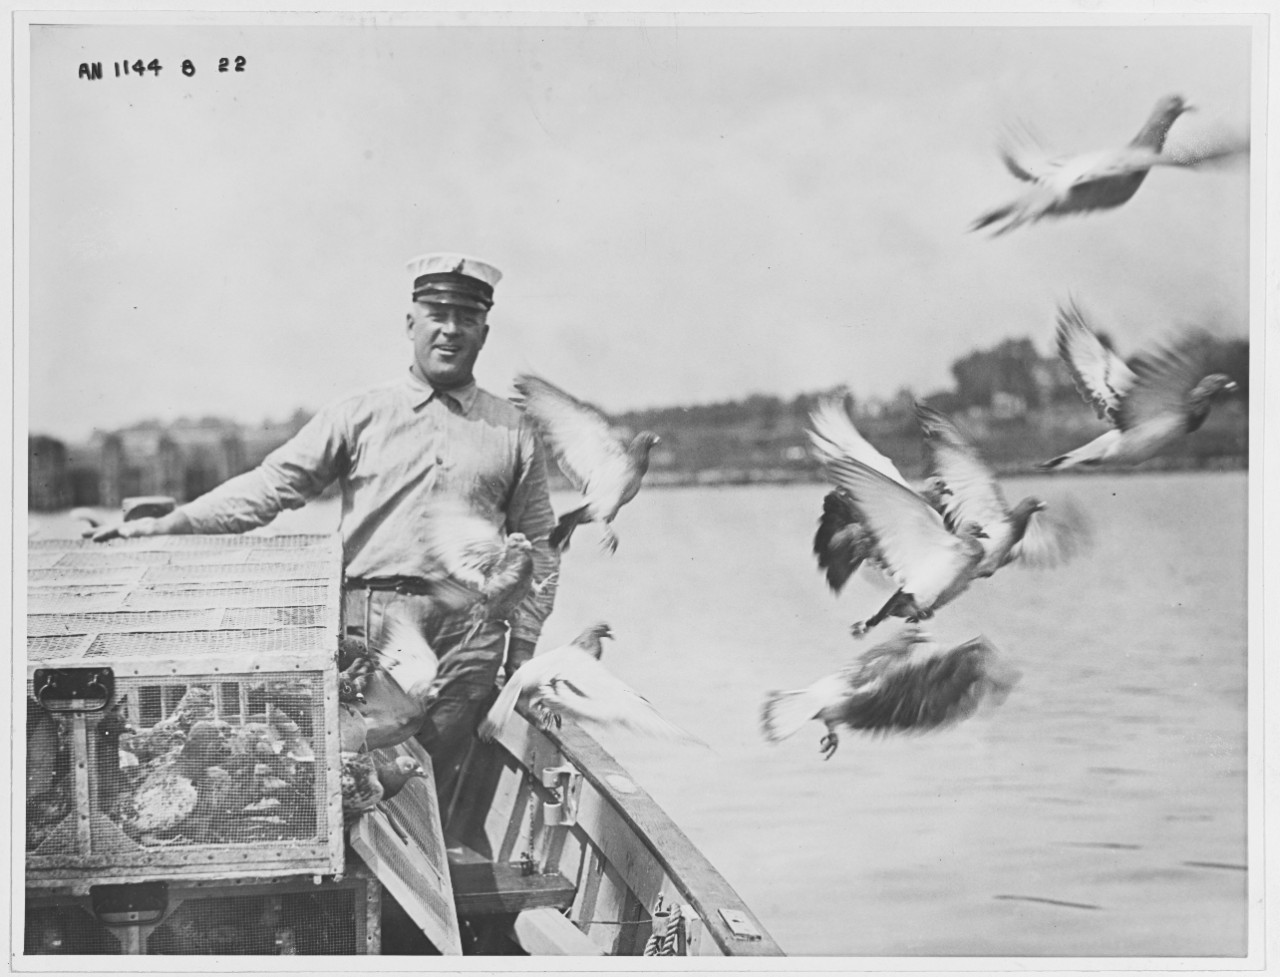 Young carrier pigeons first flight training, Potomac River, Washington, D.C.